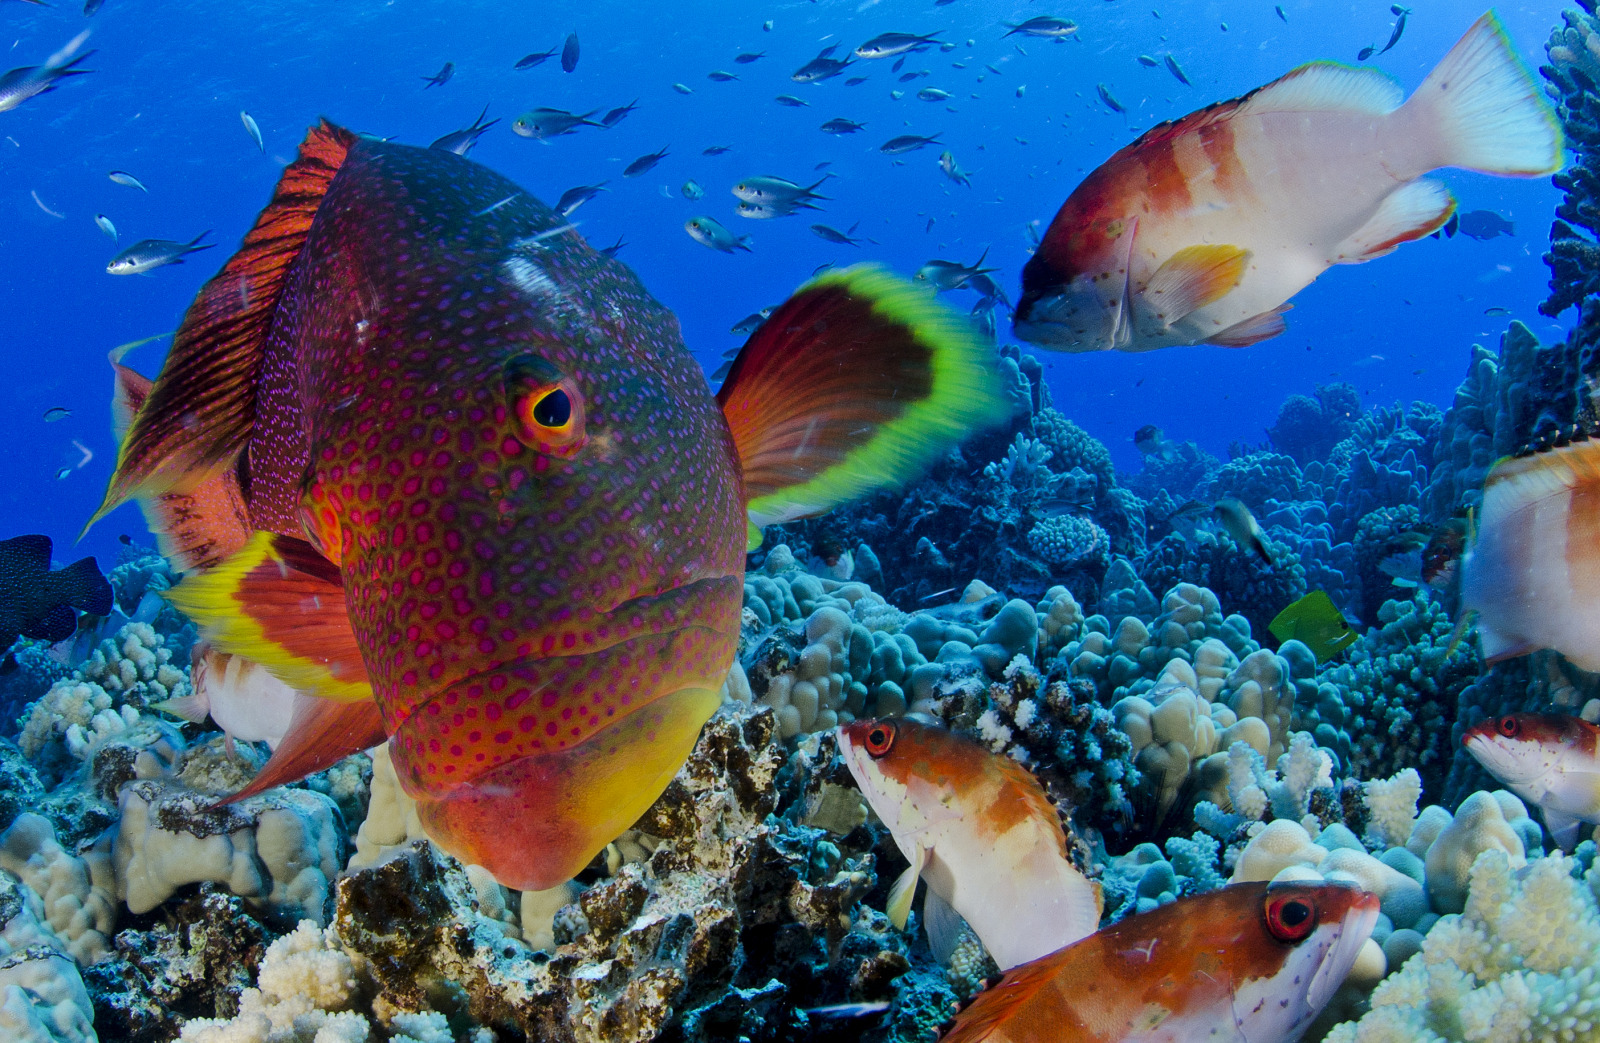 Pitcairn Island Fish 3, © Enric Sala, National Geographic